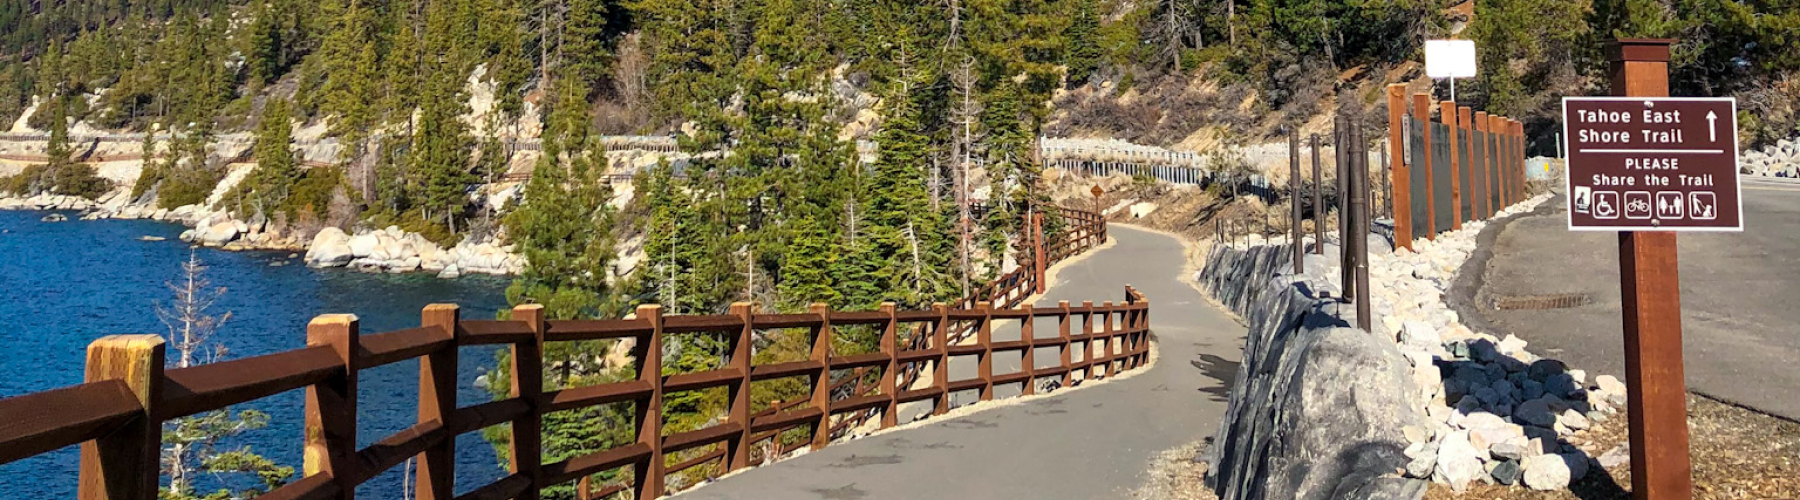 East Shore Trail pathed pathway alongside Lake Tahoe